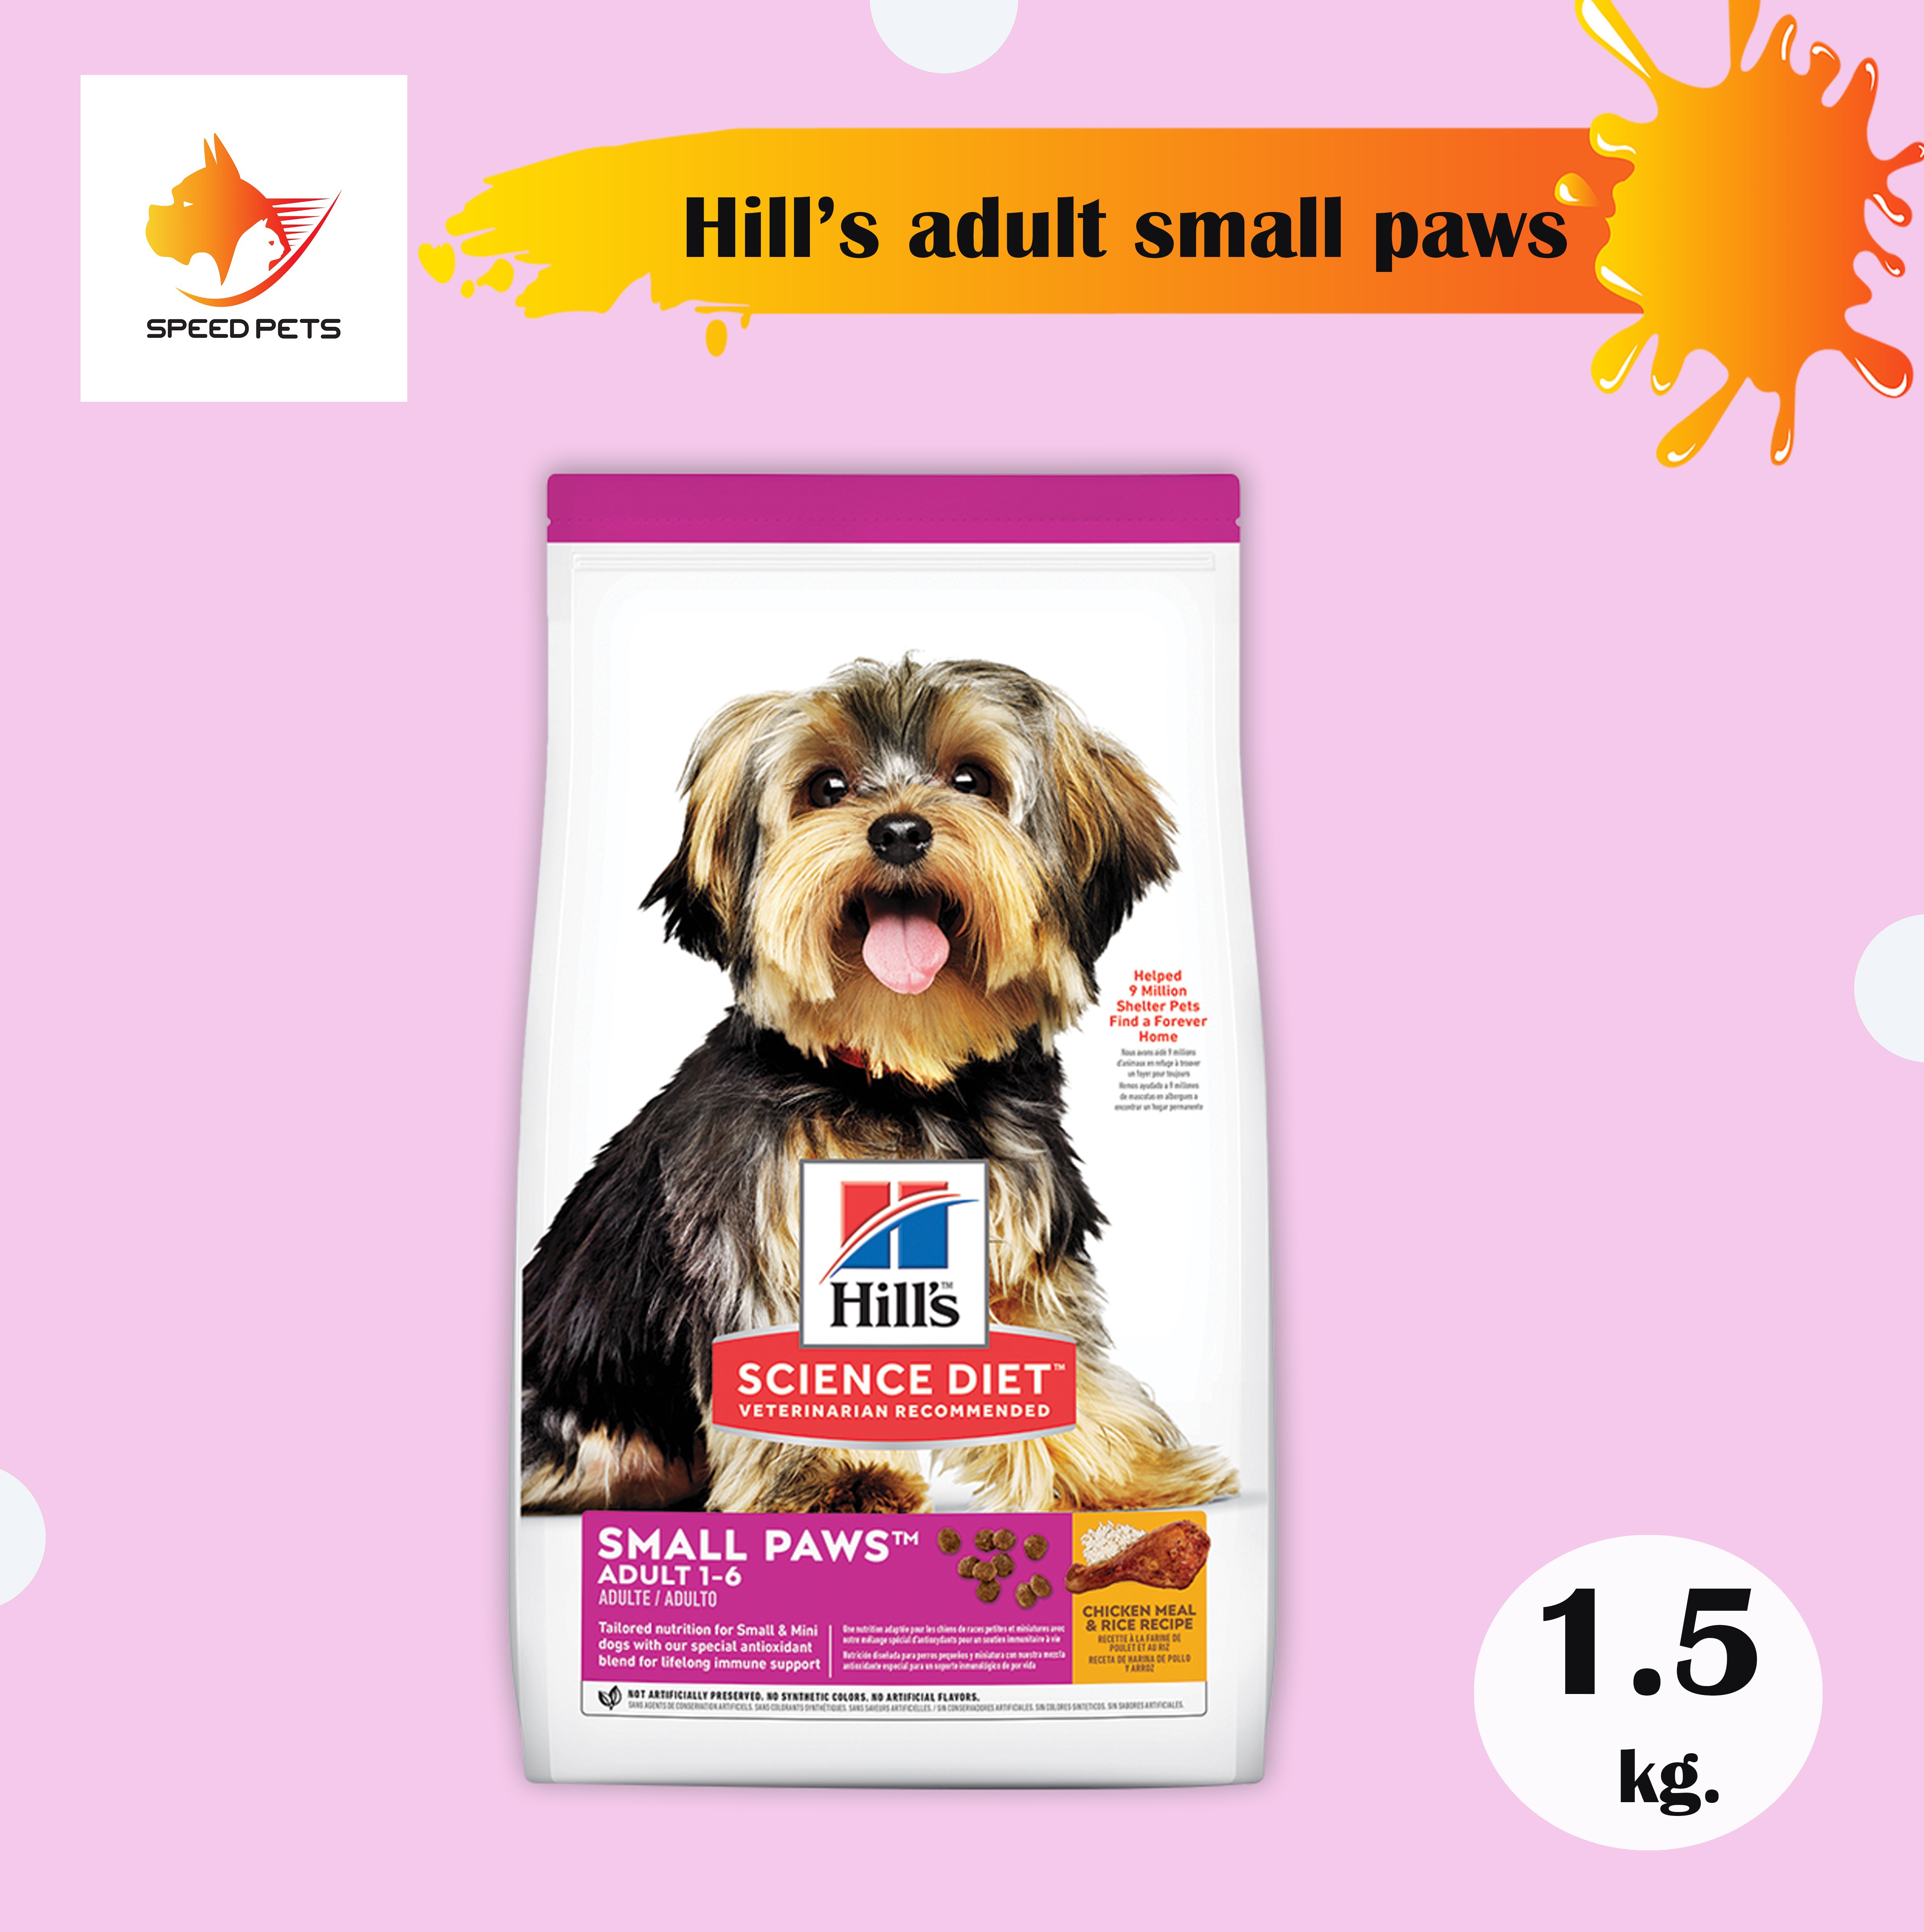 Hill's Science Diet Small Paws ฮิลล์ อาหารสุนัขพันธุ์เล็ก อาหารสุนัข อาหารเม็ดสุนัข อายุ 1-6 ปี ขนาด 1.5 กก